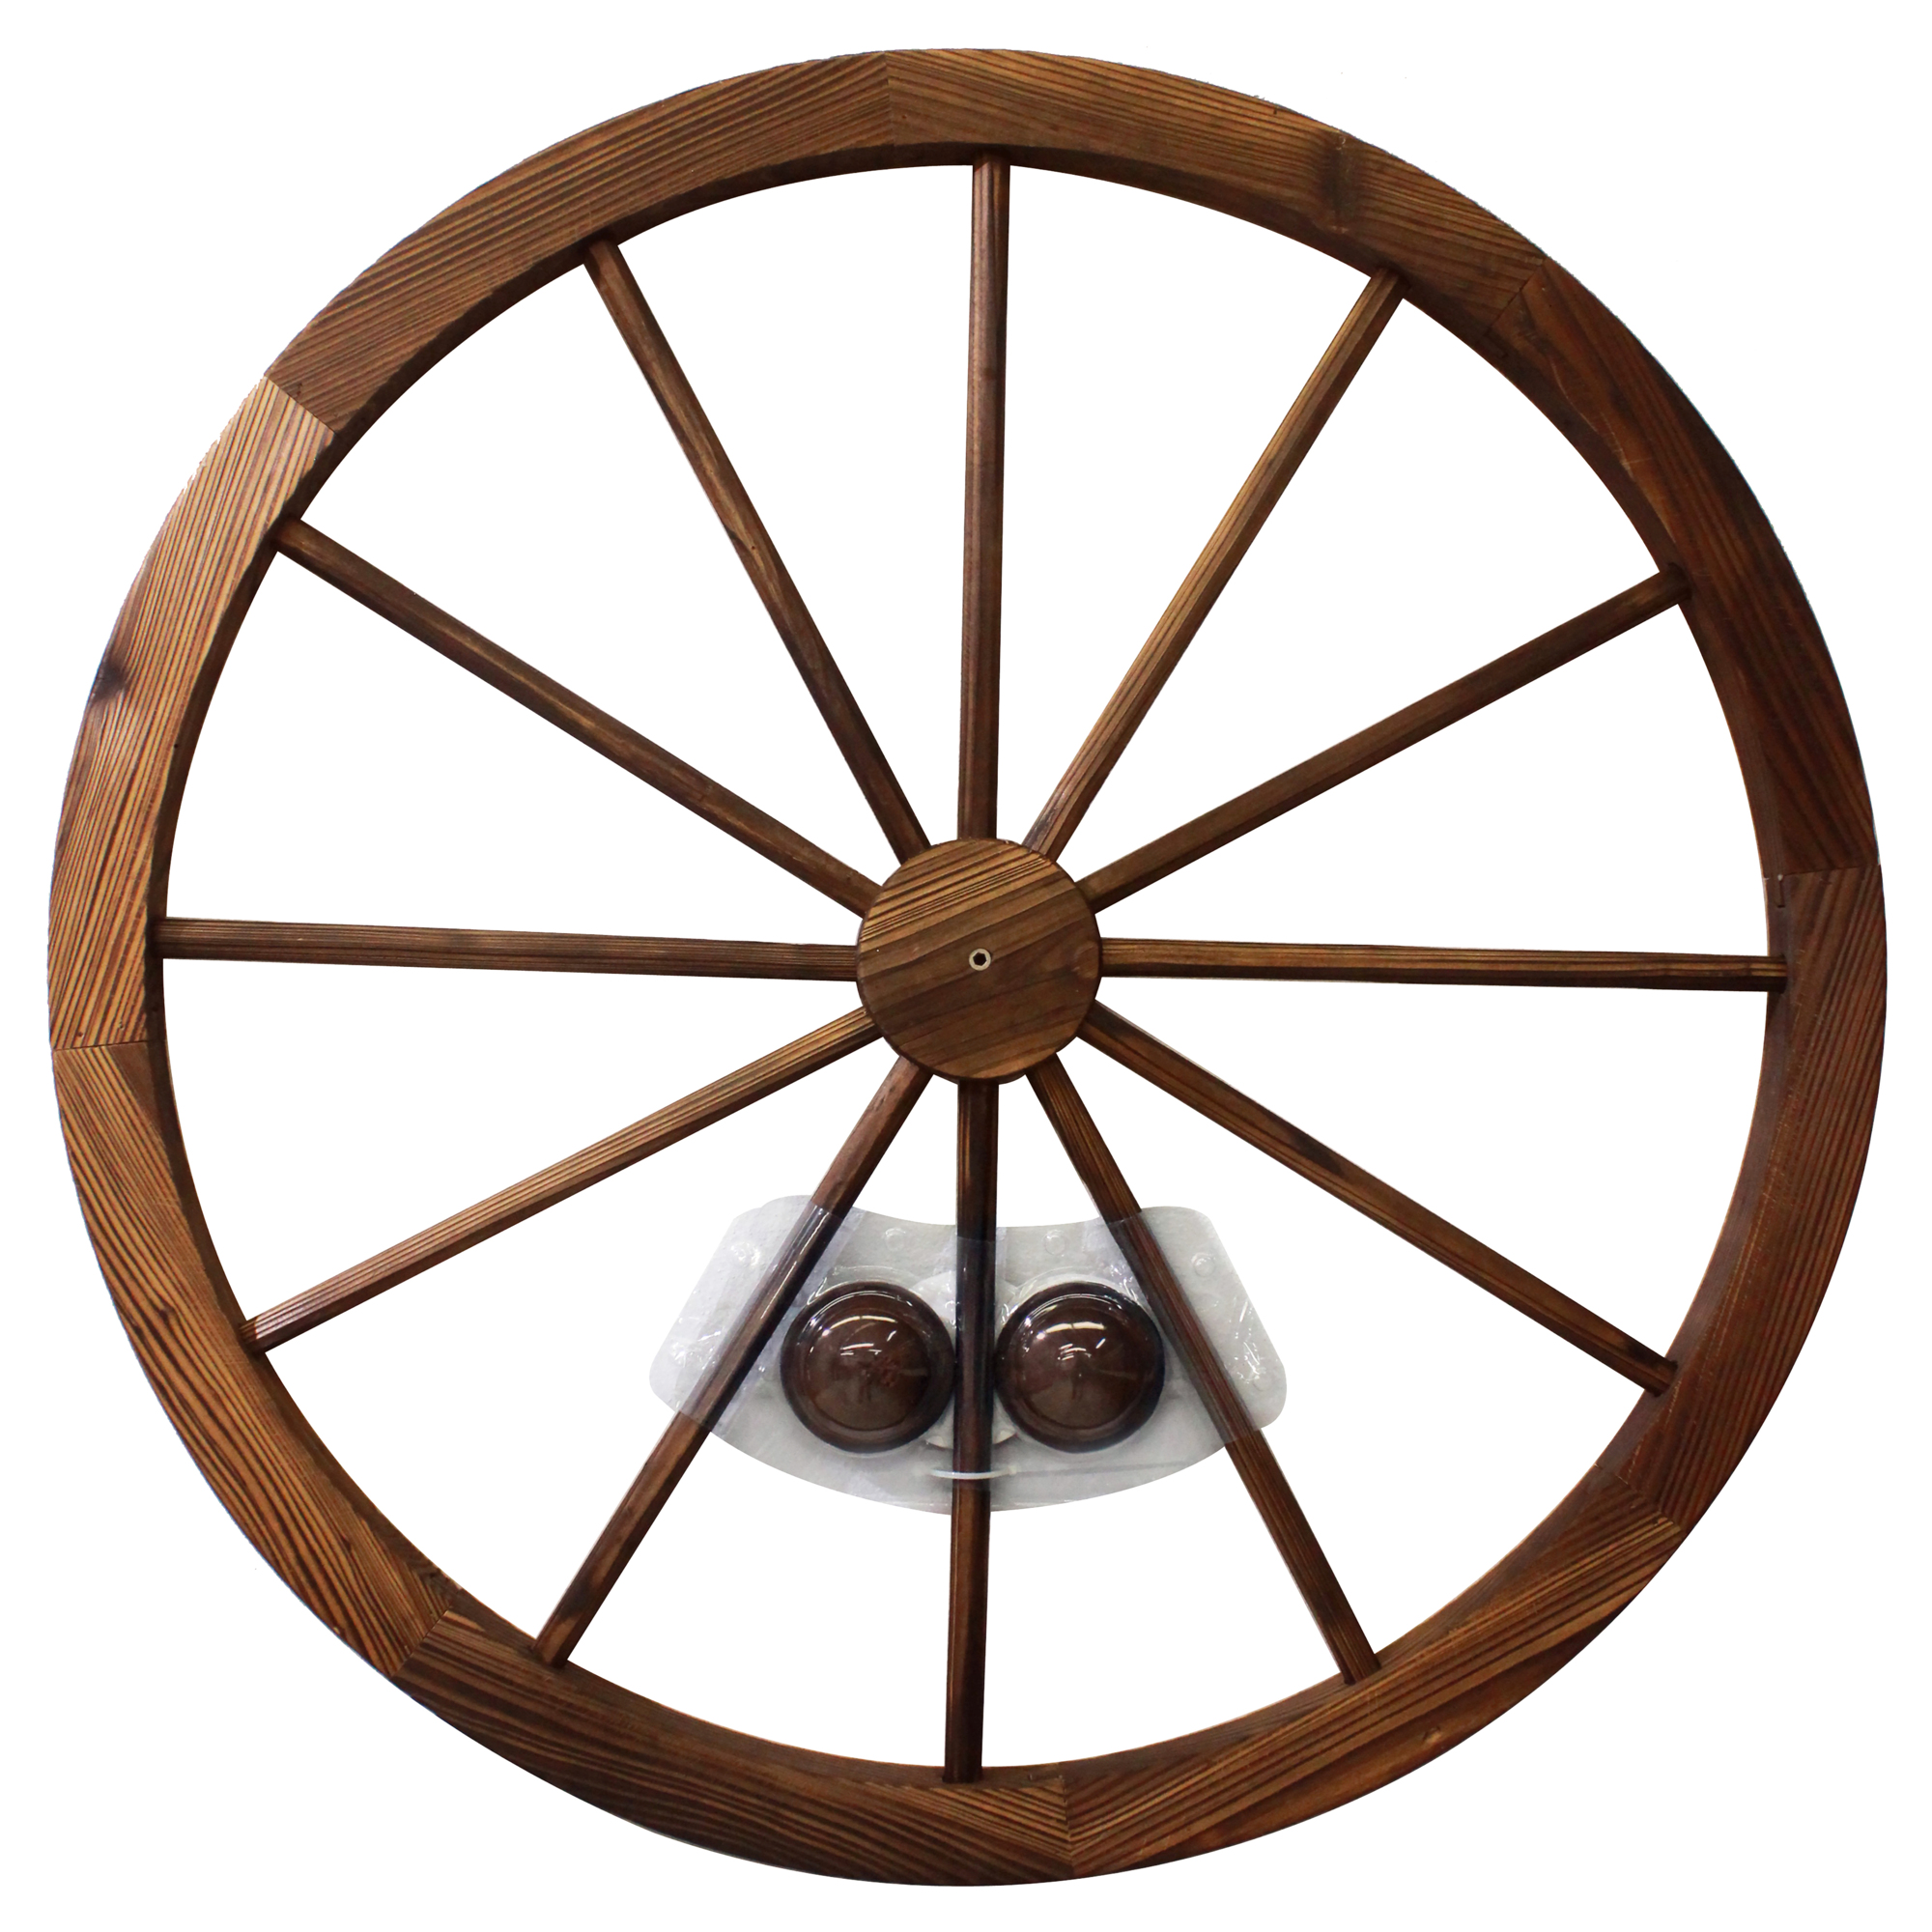 Leigh Country, Wagon Wheel - 36Inch, Model TX 93953